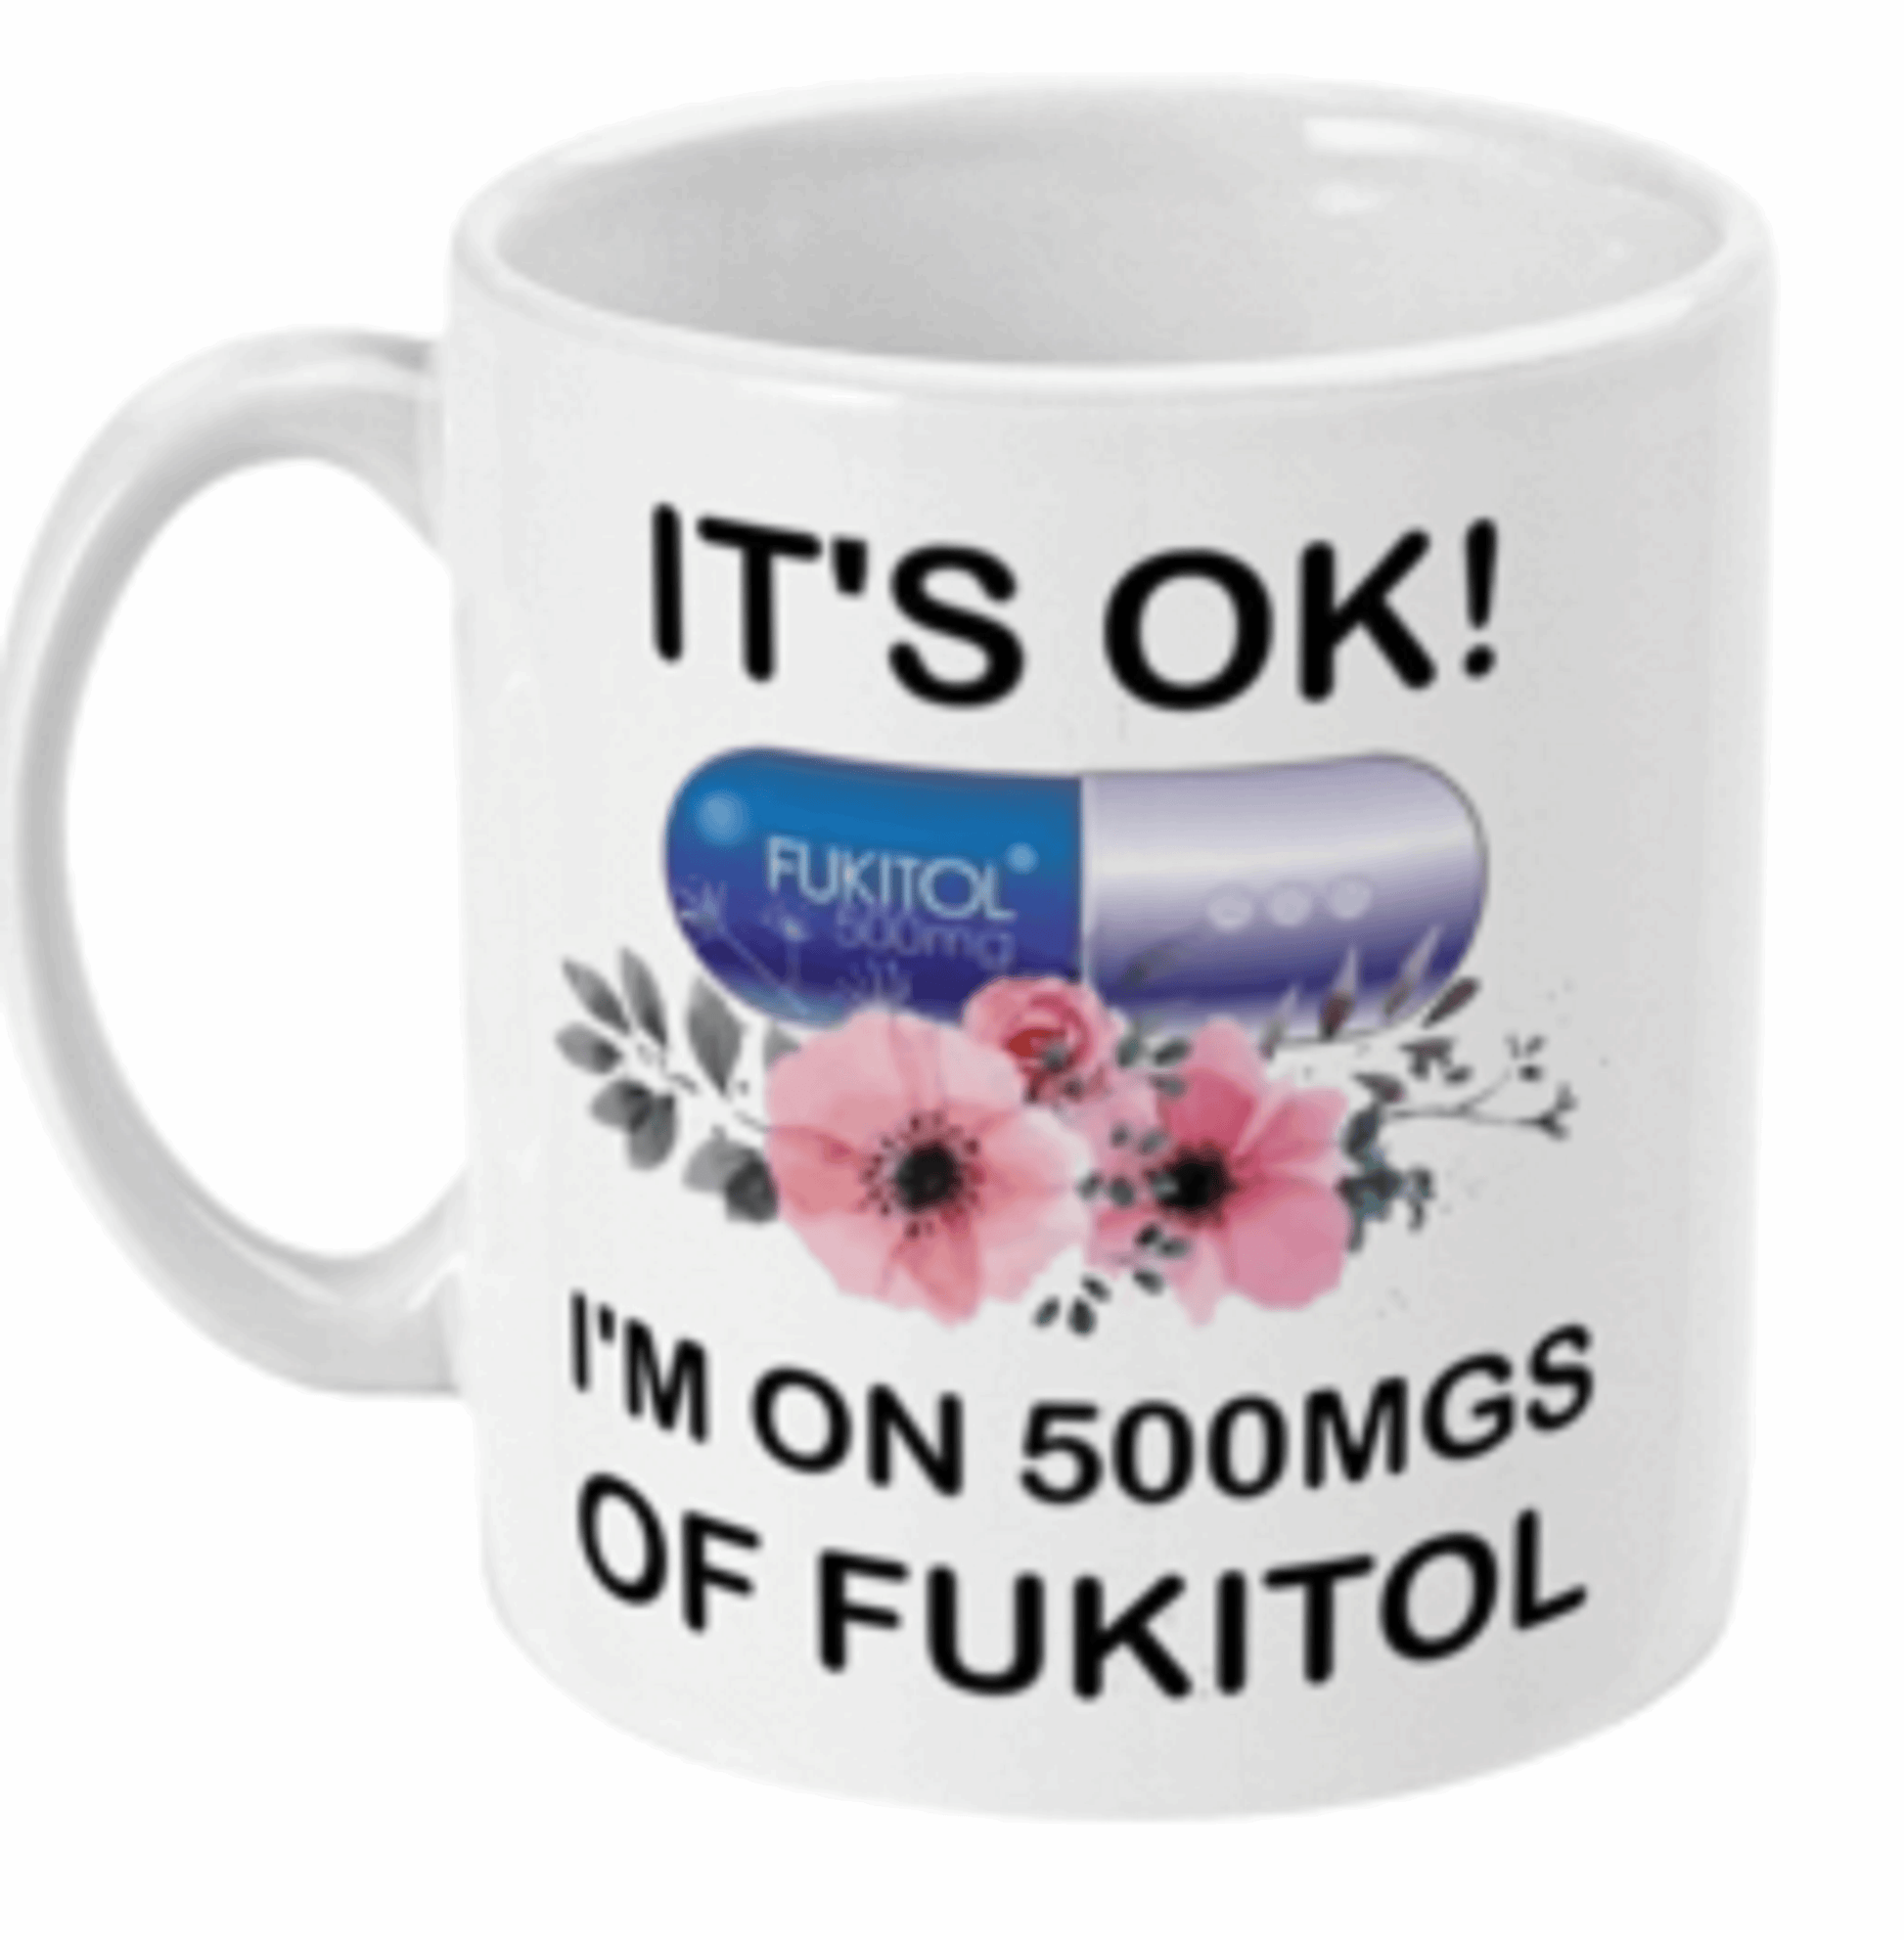  It's OK I'm on 500mg of Fukitol Coffee Mug by Free Spirit Accessories sold by Free Spirit Accessories